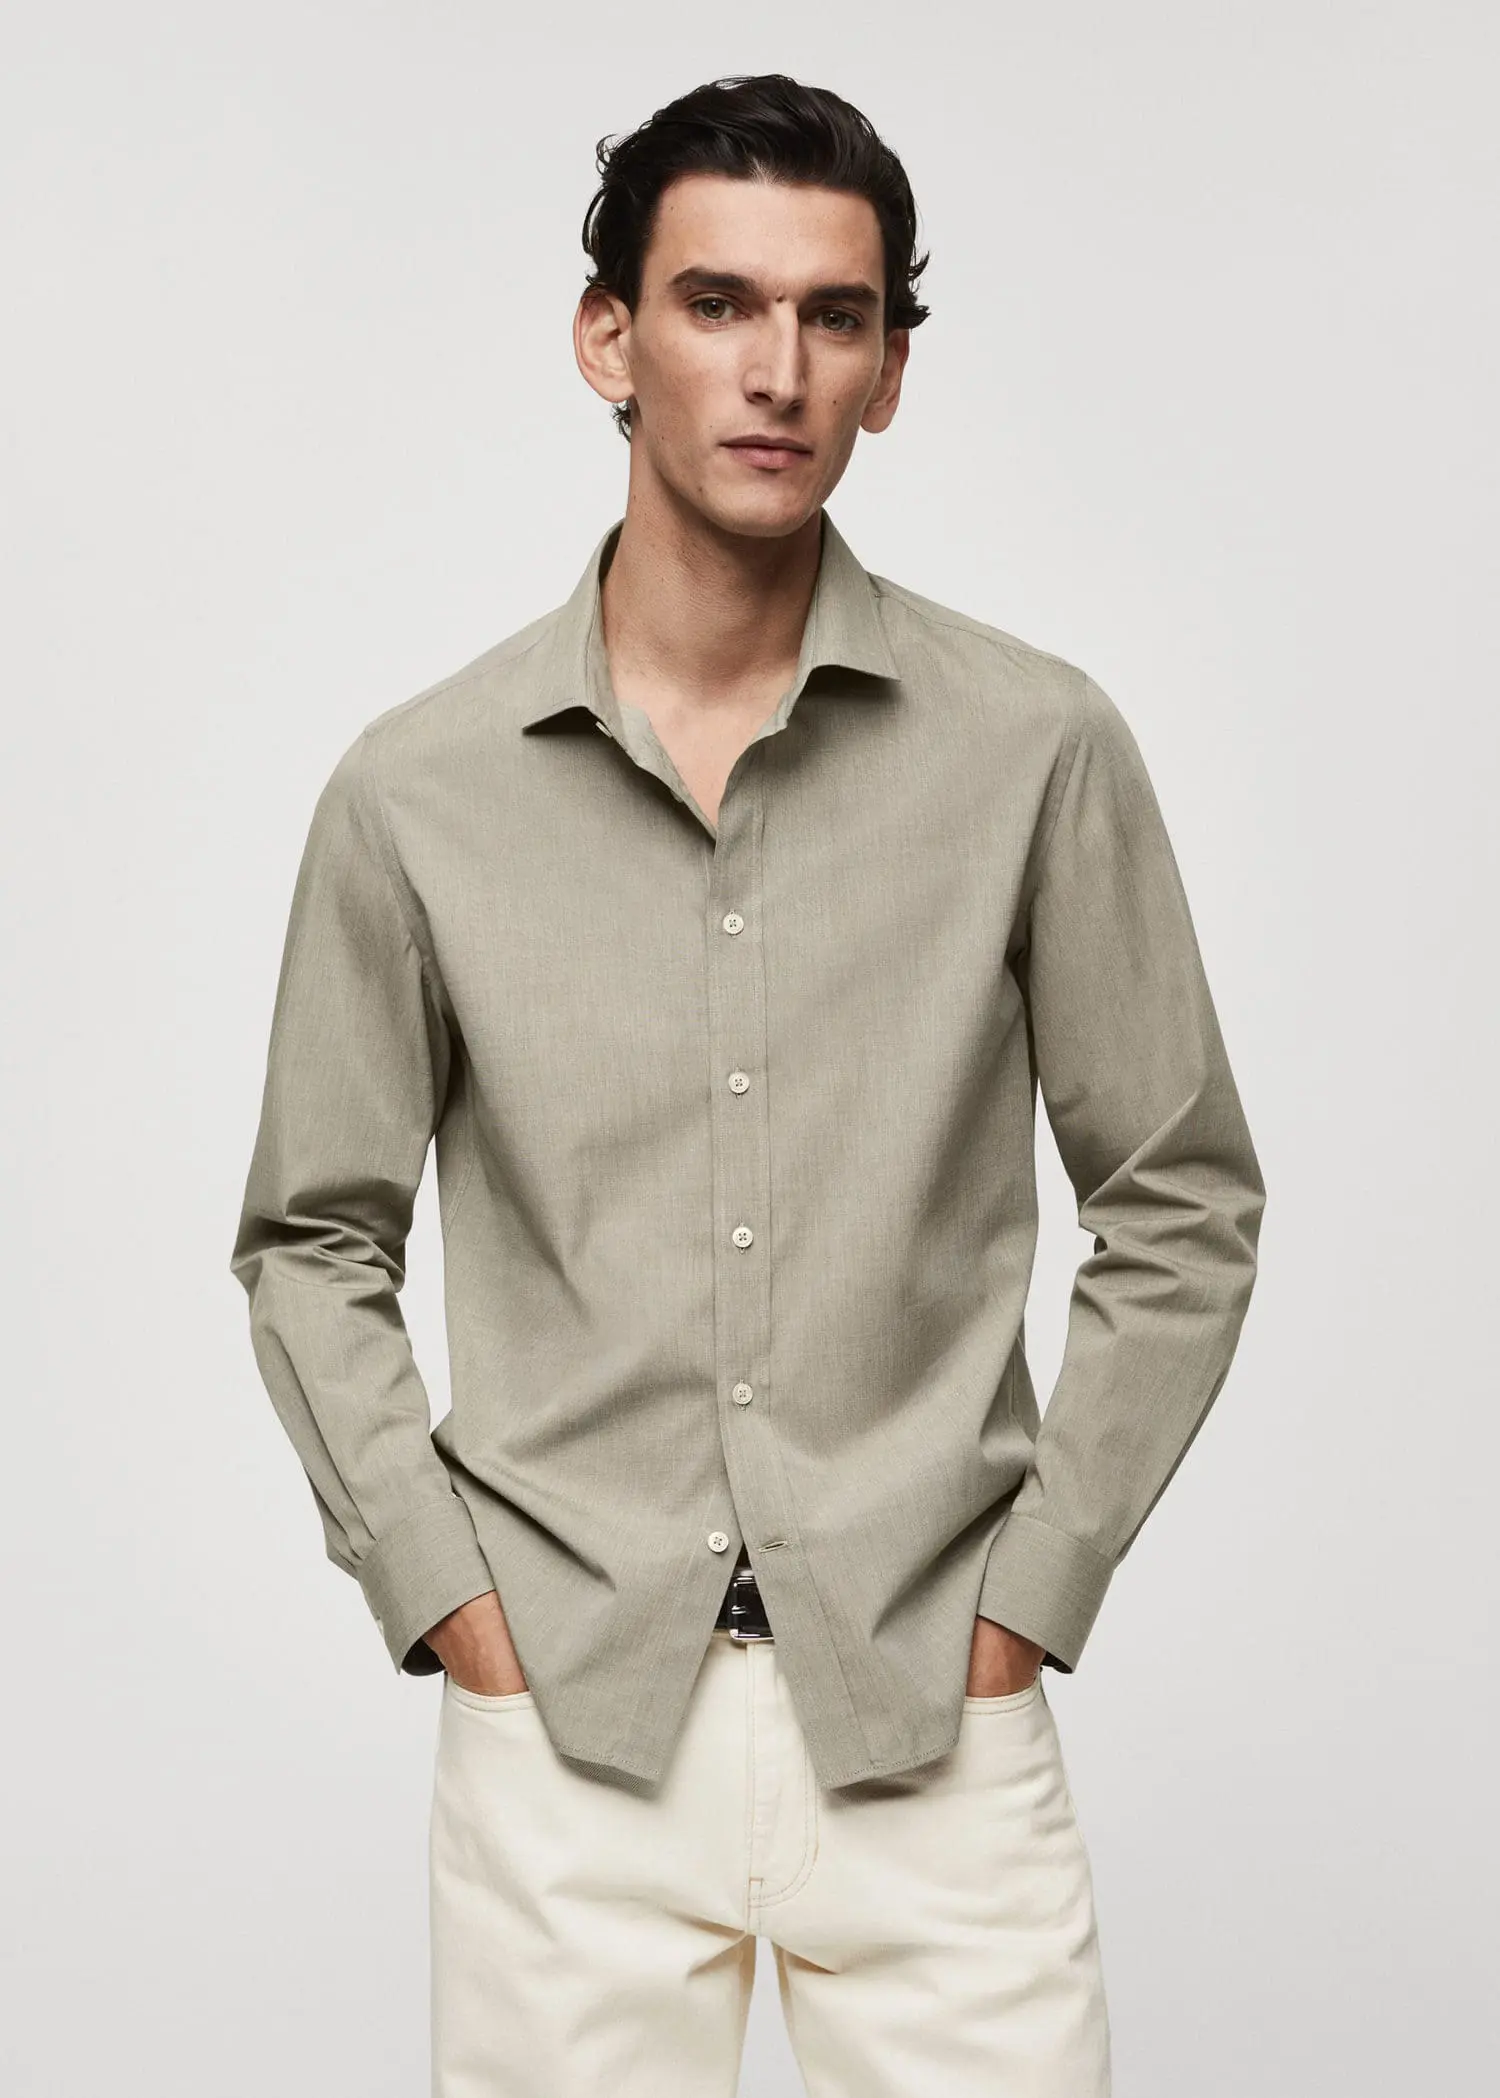 Mango Fil-à-fil cotton shirt. 2